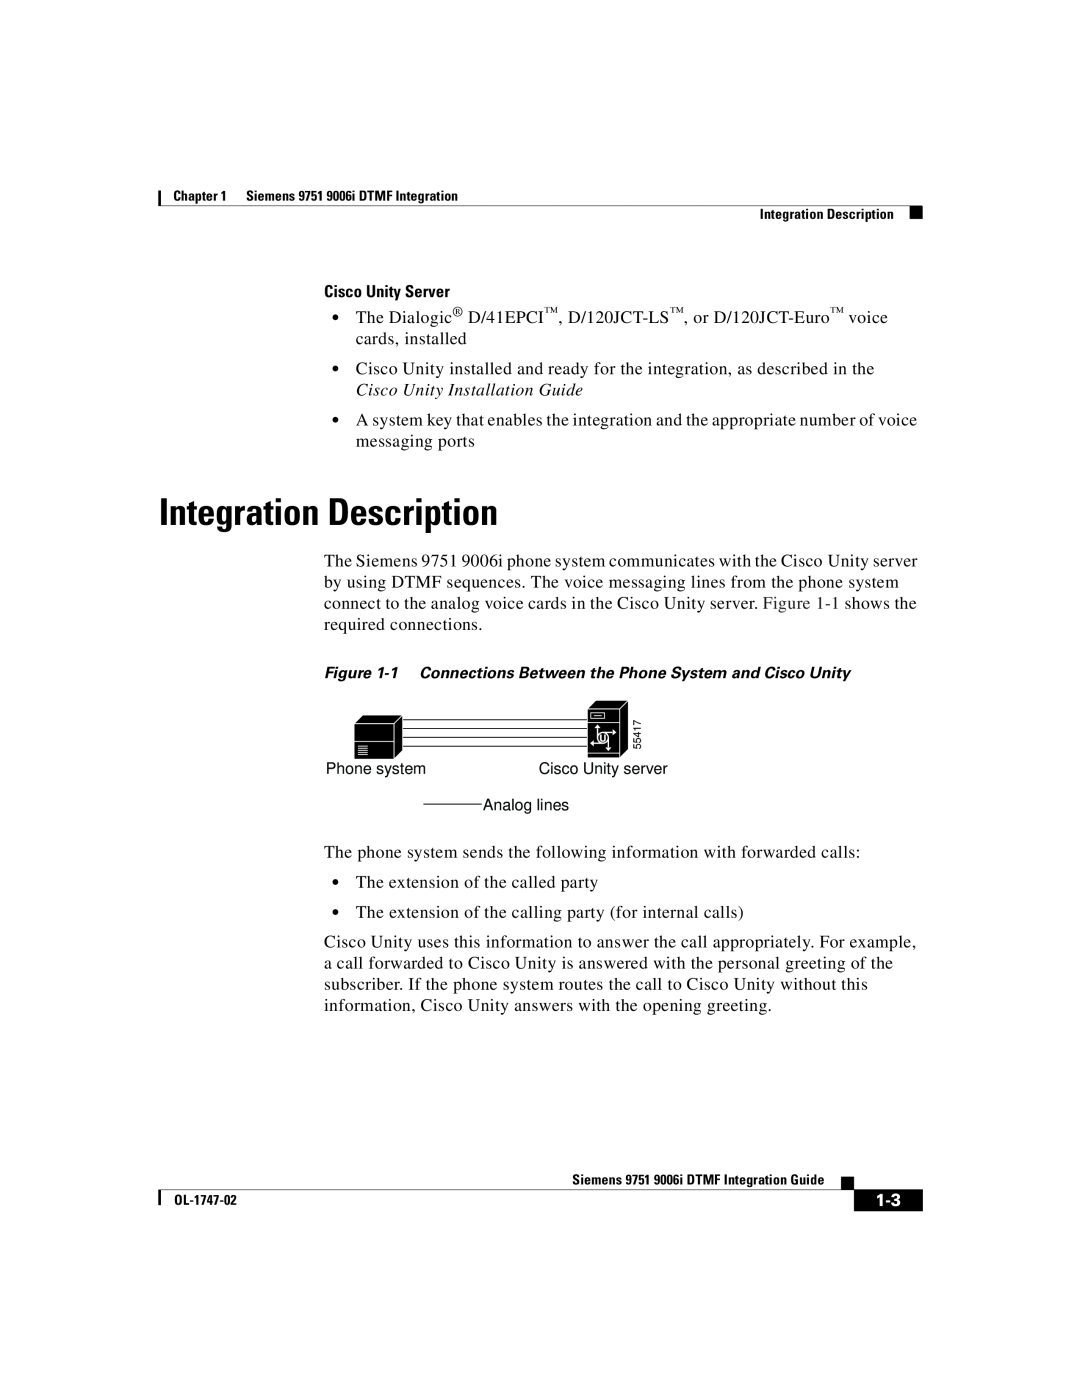 Able Planet OL-1747-02 manual Integration Description, Cisco Unity Server 